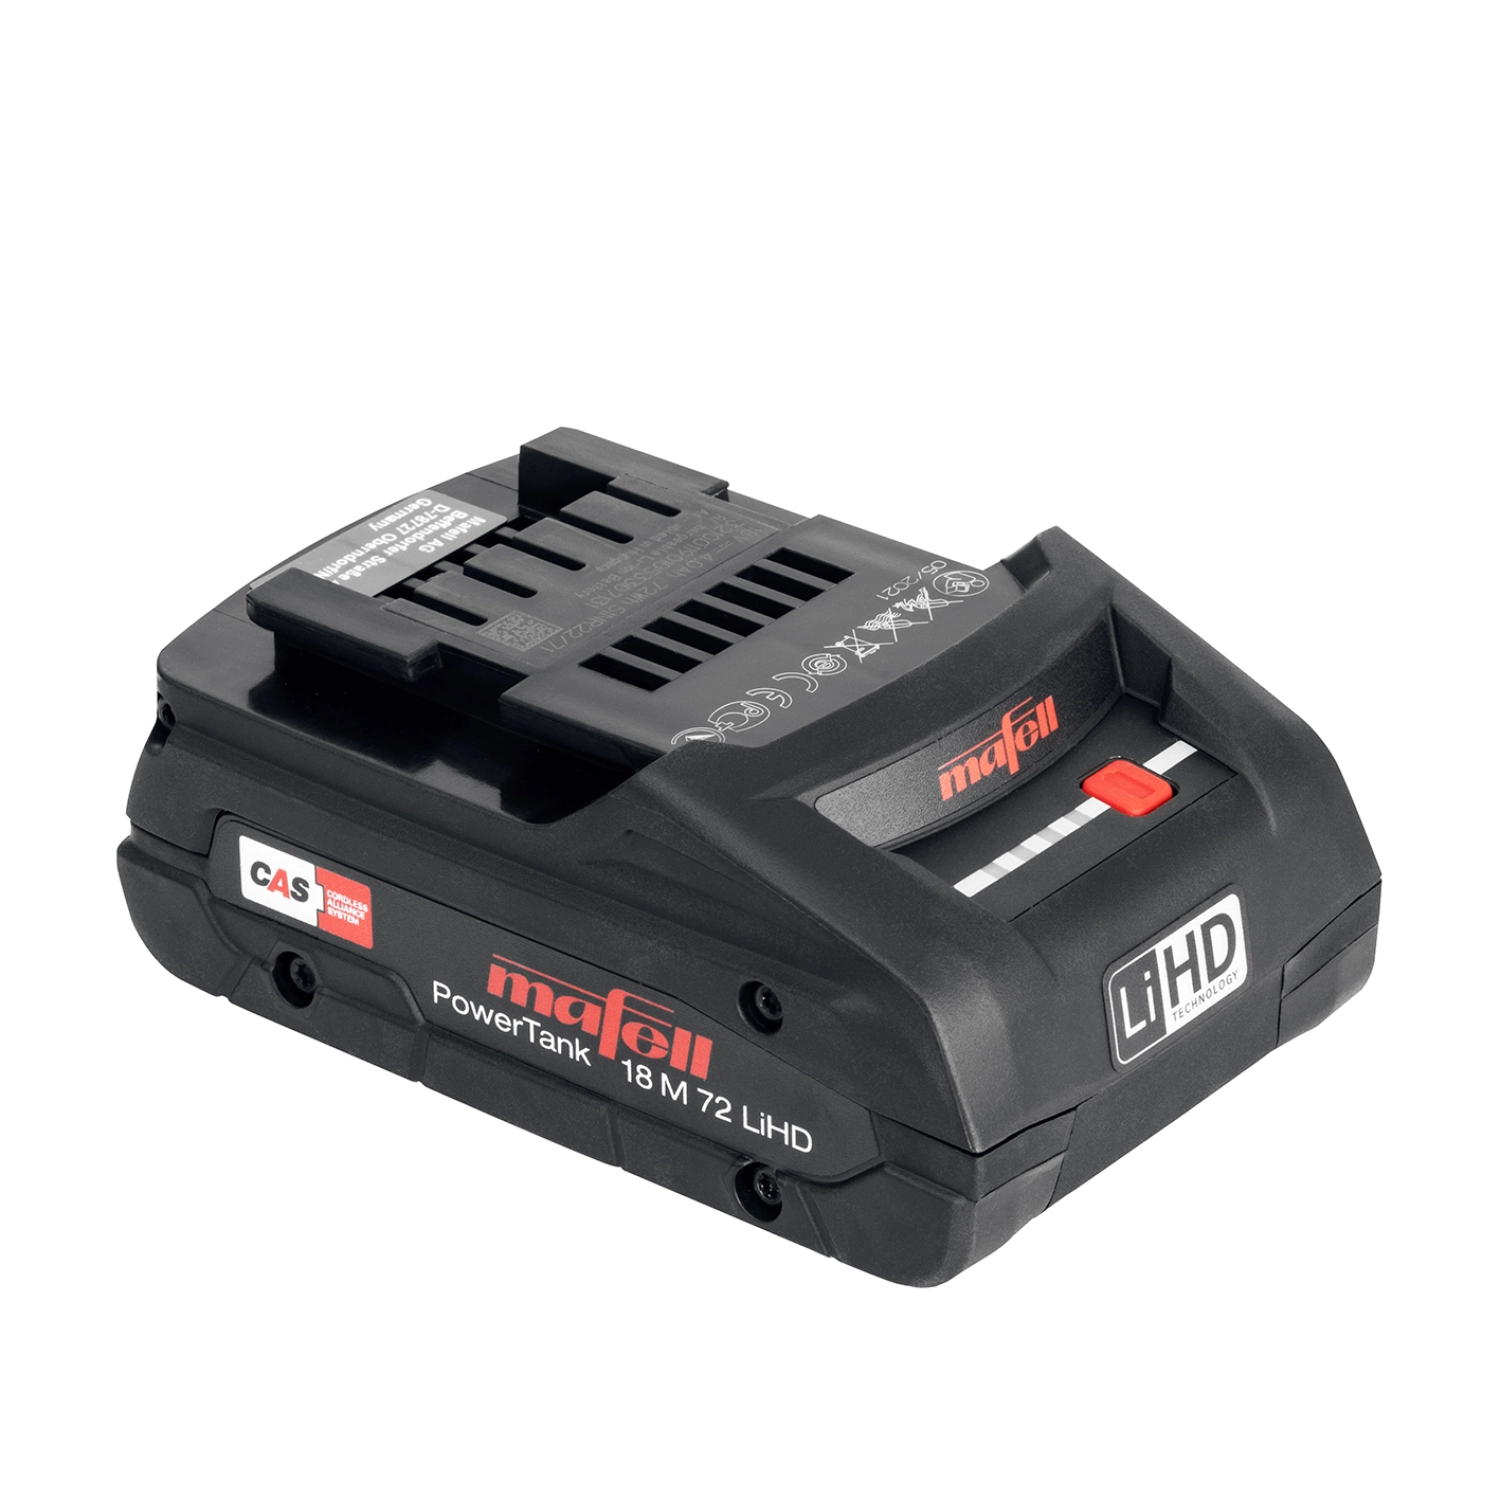 Mafell 18V LiHD Batterie PowerTank 18 M 72 - 4.0 Ah-image